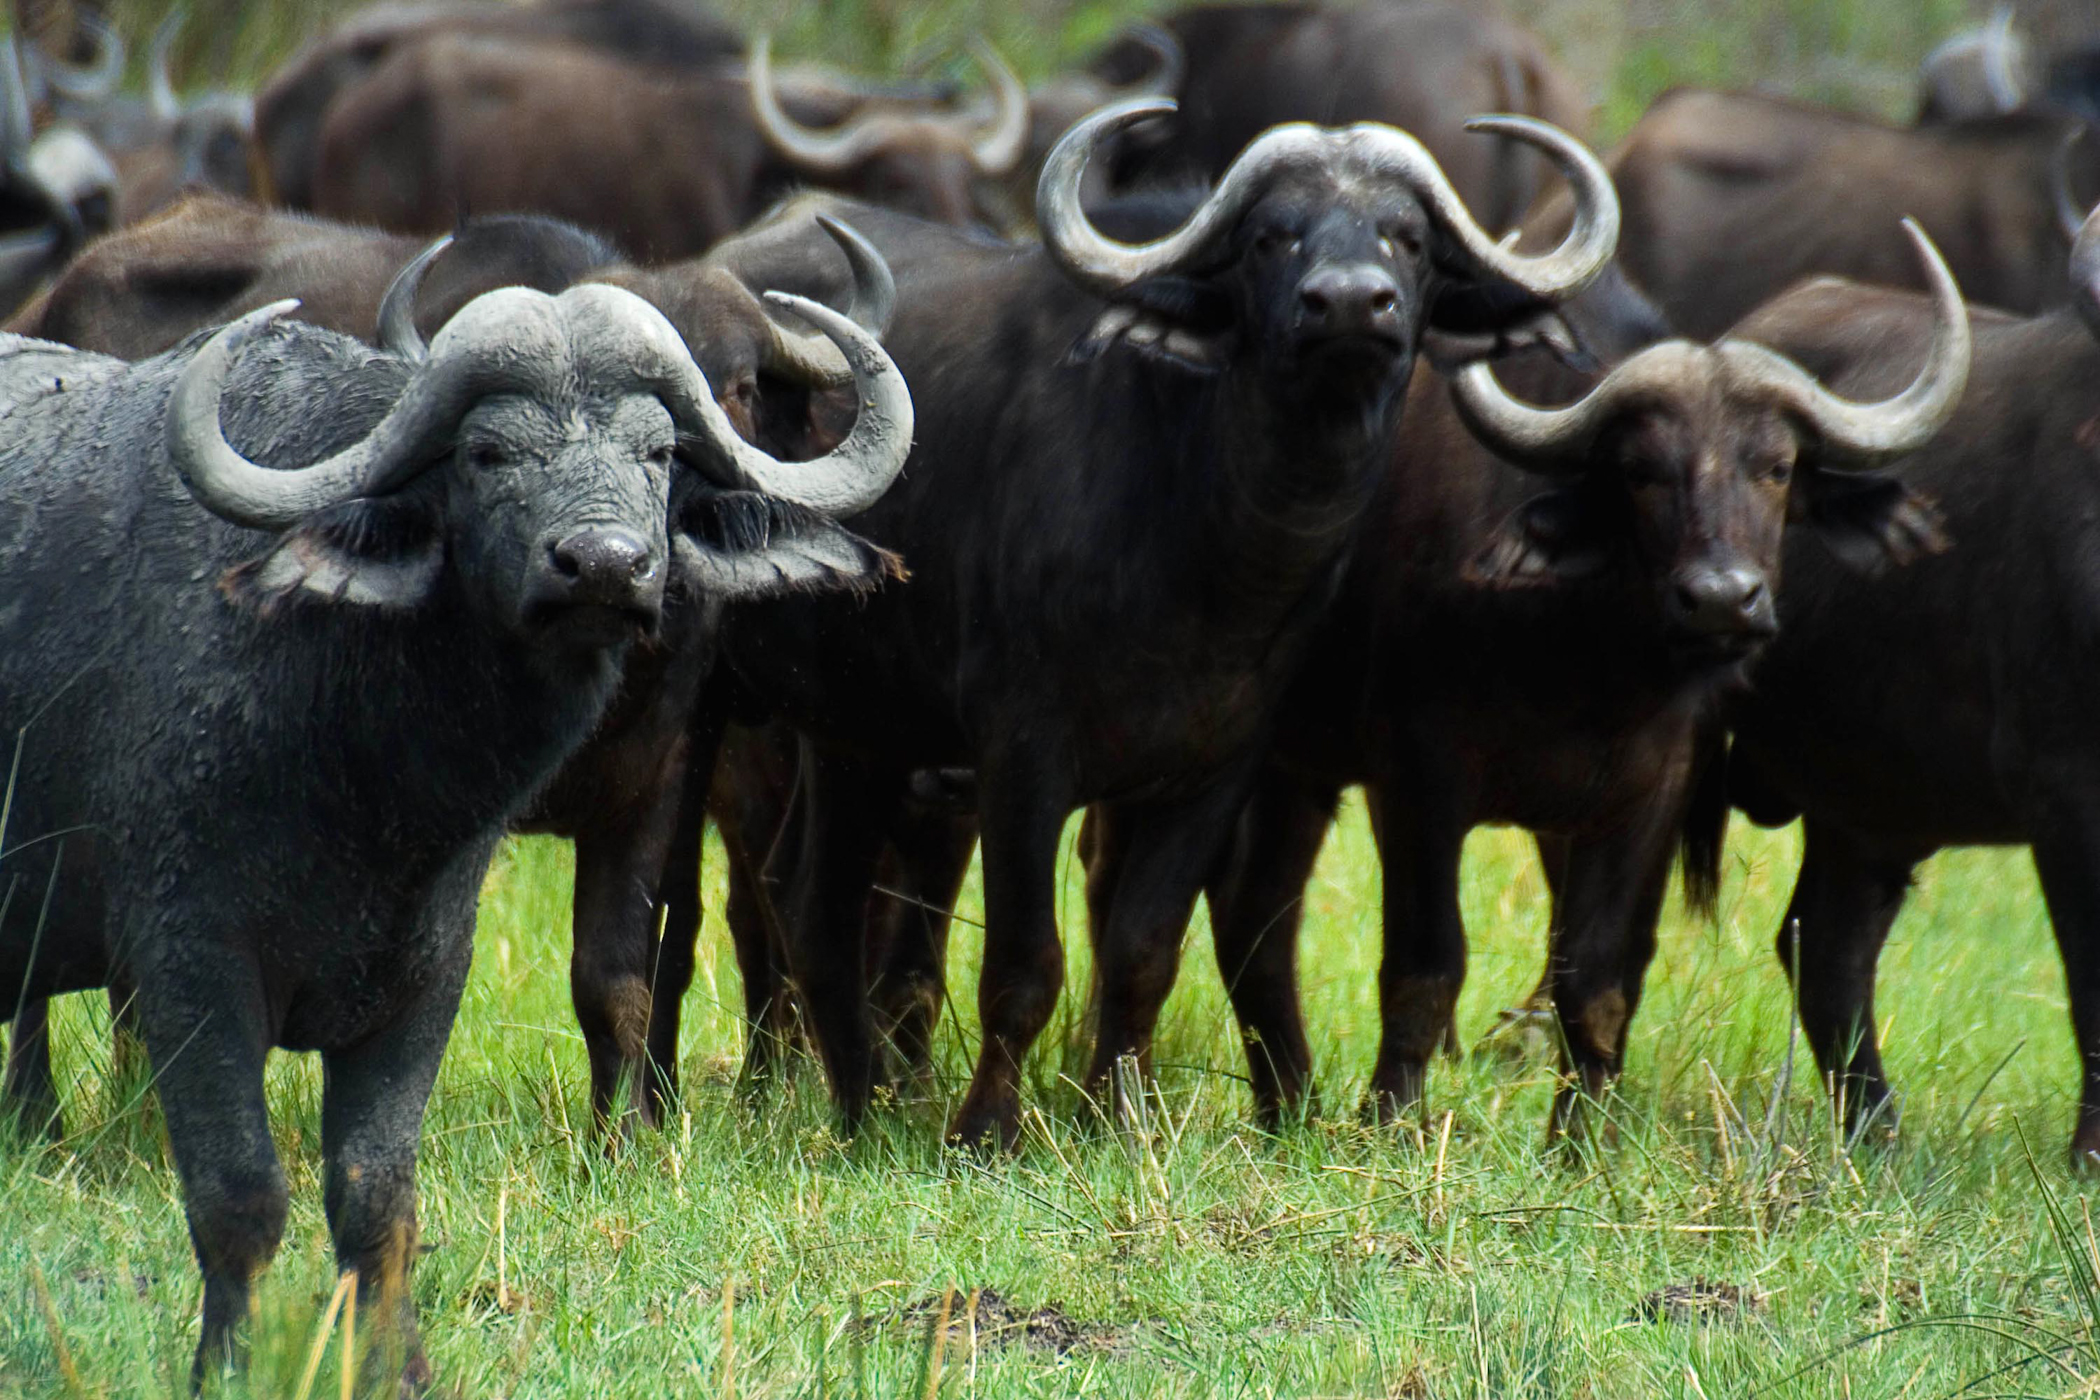 Construction in land-starved Hong Kong shrinks wild buffaloes habitat